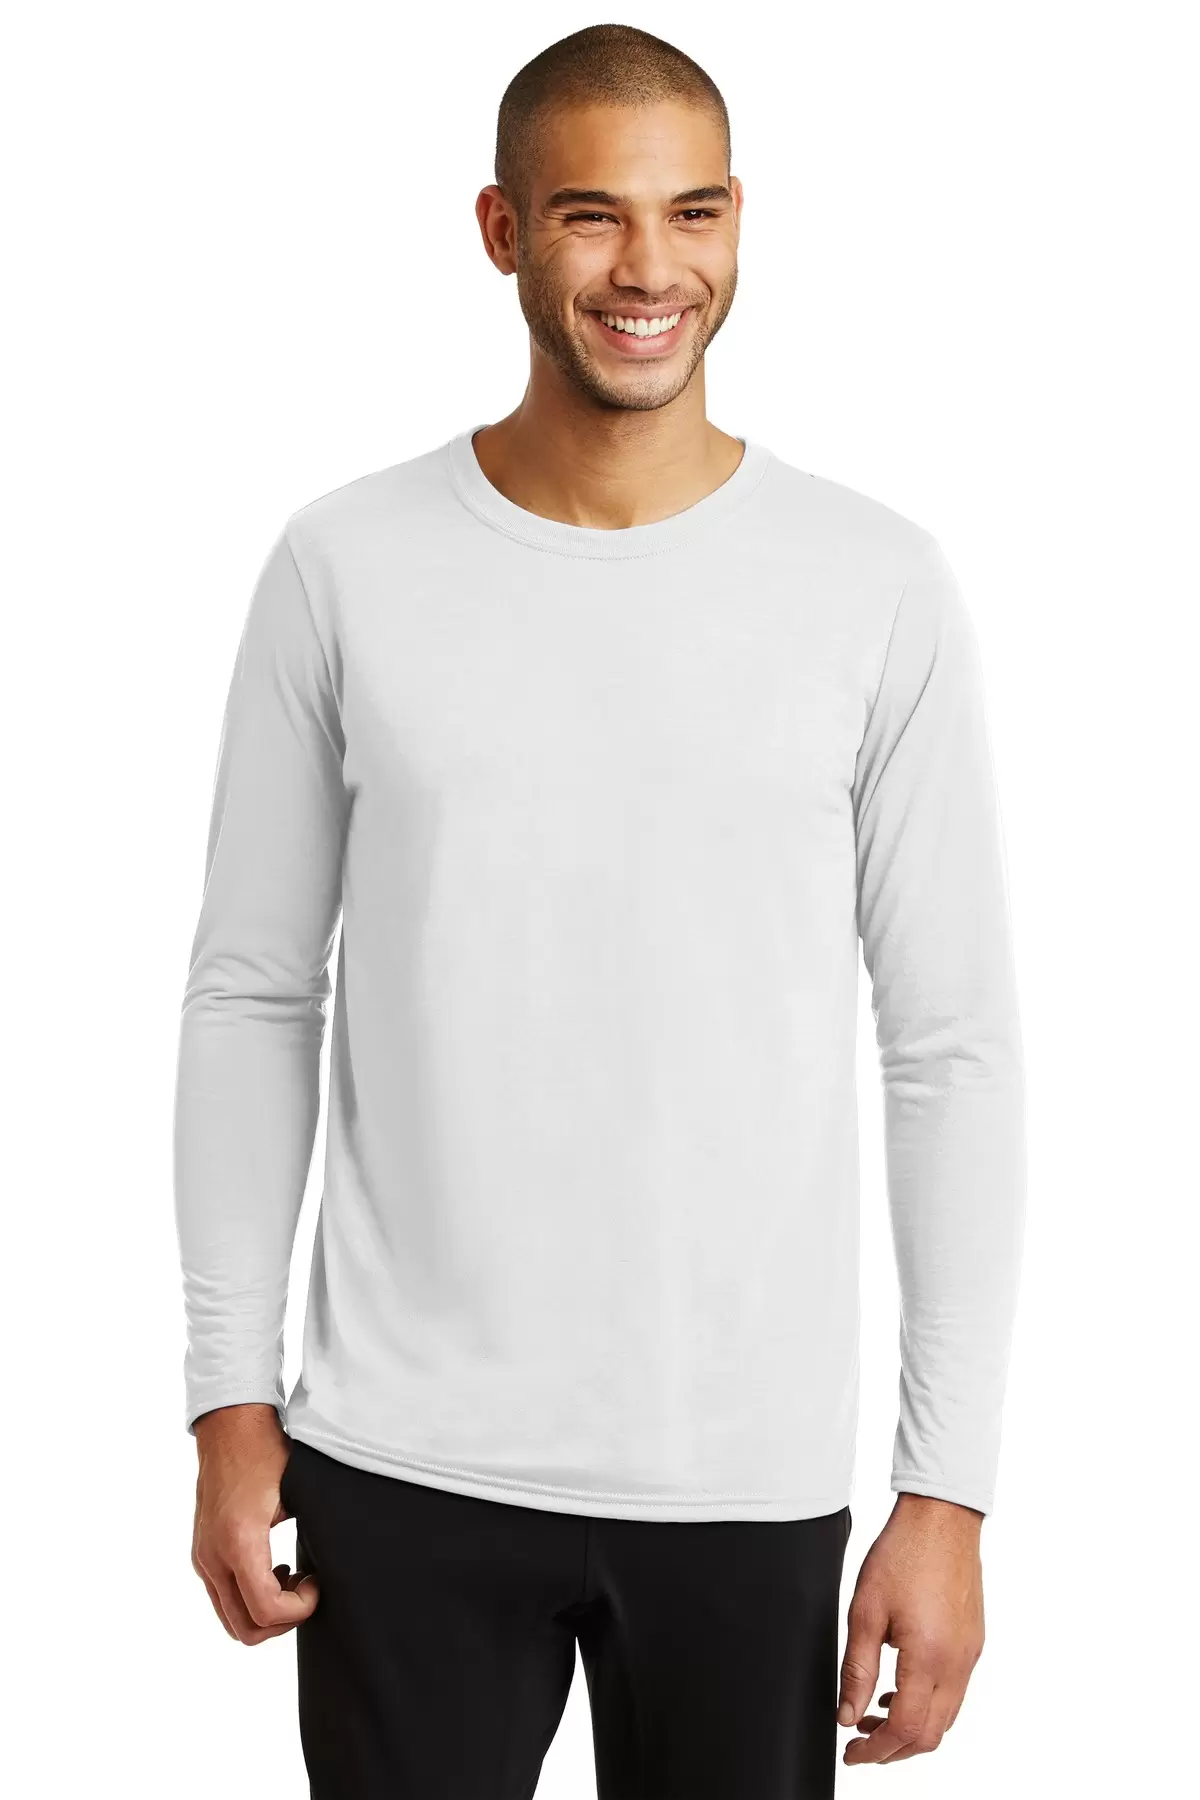 42400 Gildan Adult Core Performance Long-Sleeve T-Shirt - From $5.07